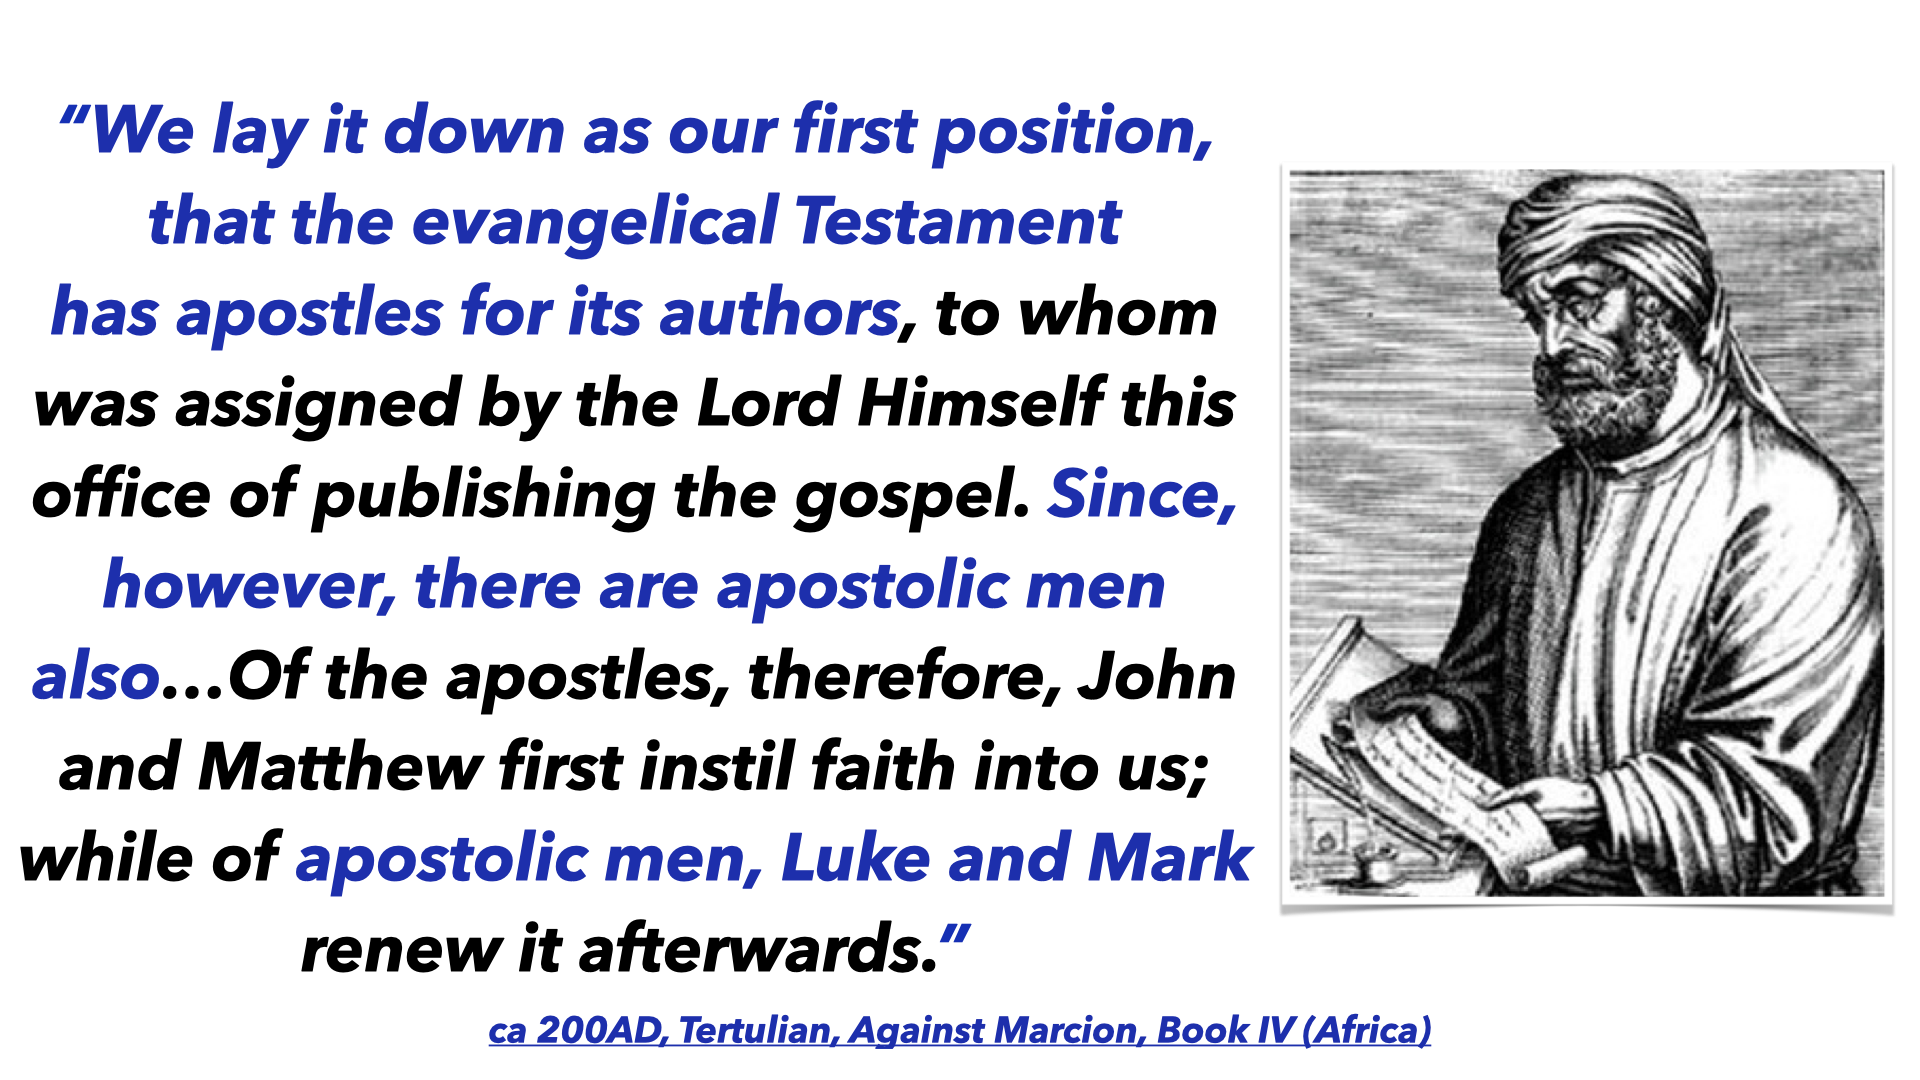 (Tertulian mentions Luke & Gospel Writers) Tertulian, Against Marcion, Book IV